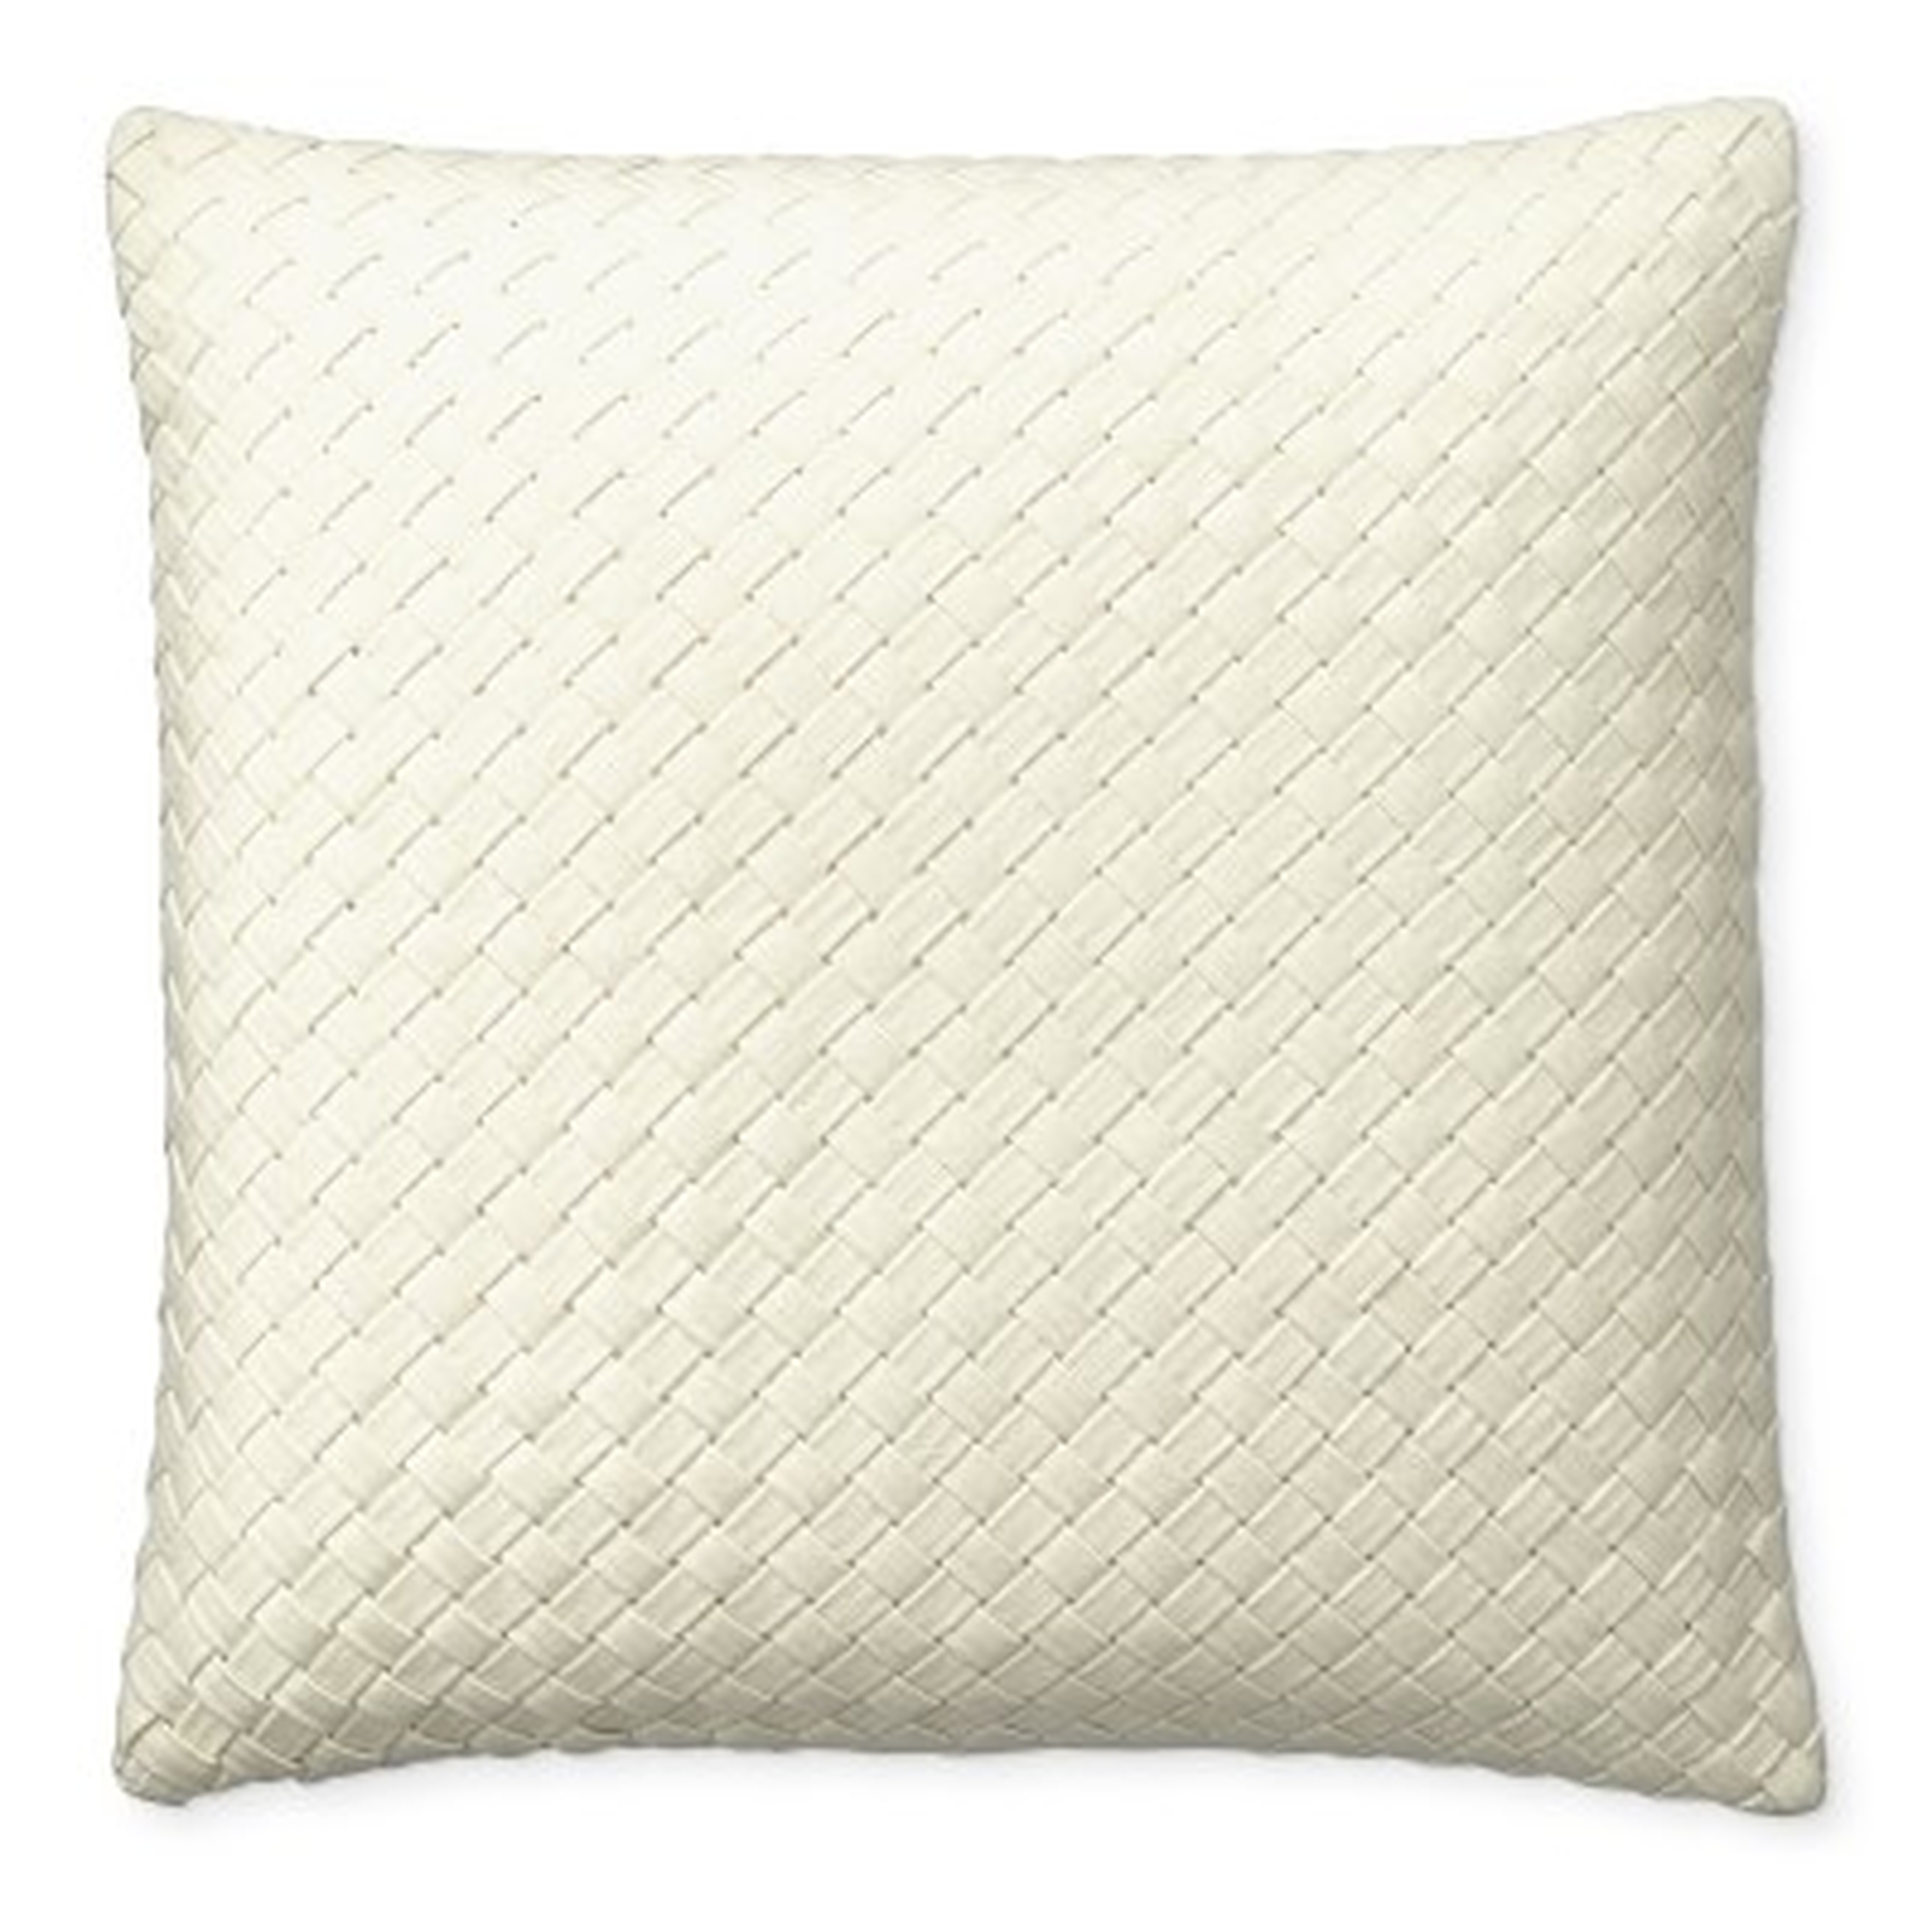 Baileywick Woven Linen Pillow Cover, 22" X 22", Oyster - Williams Sonoma